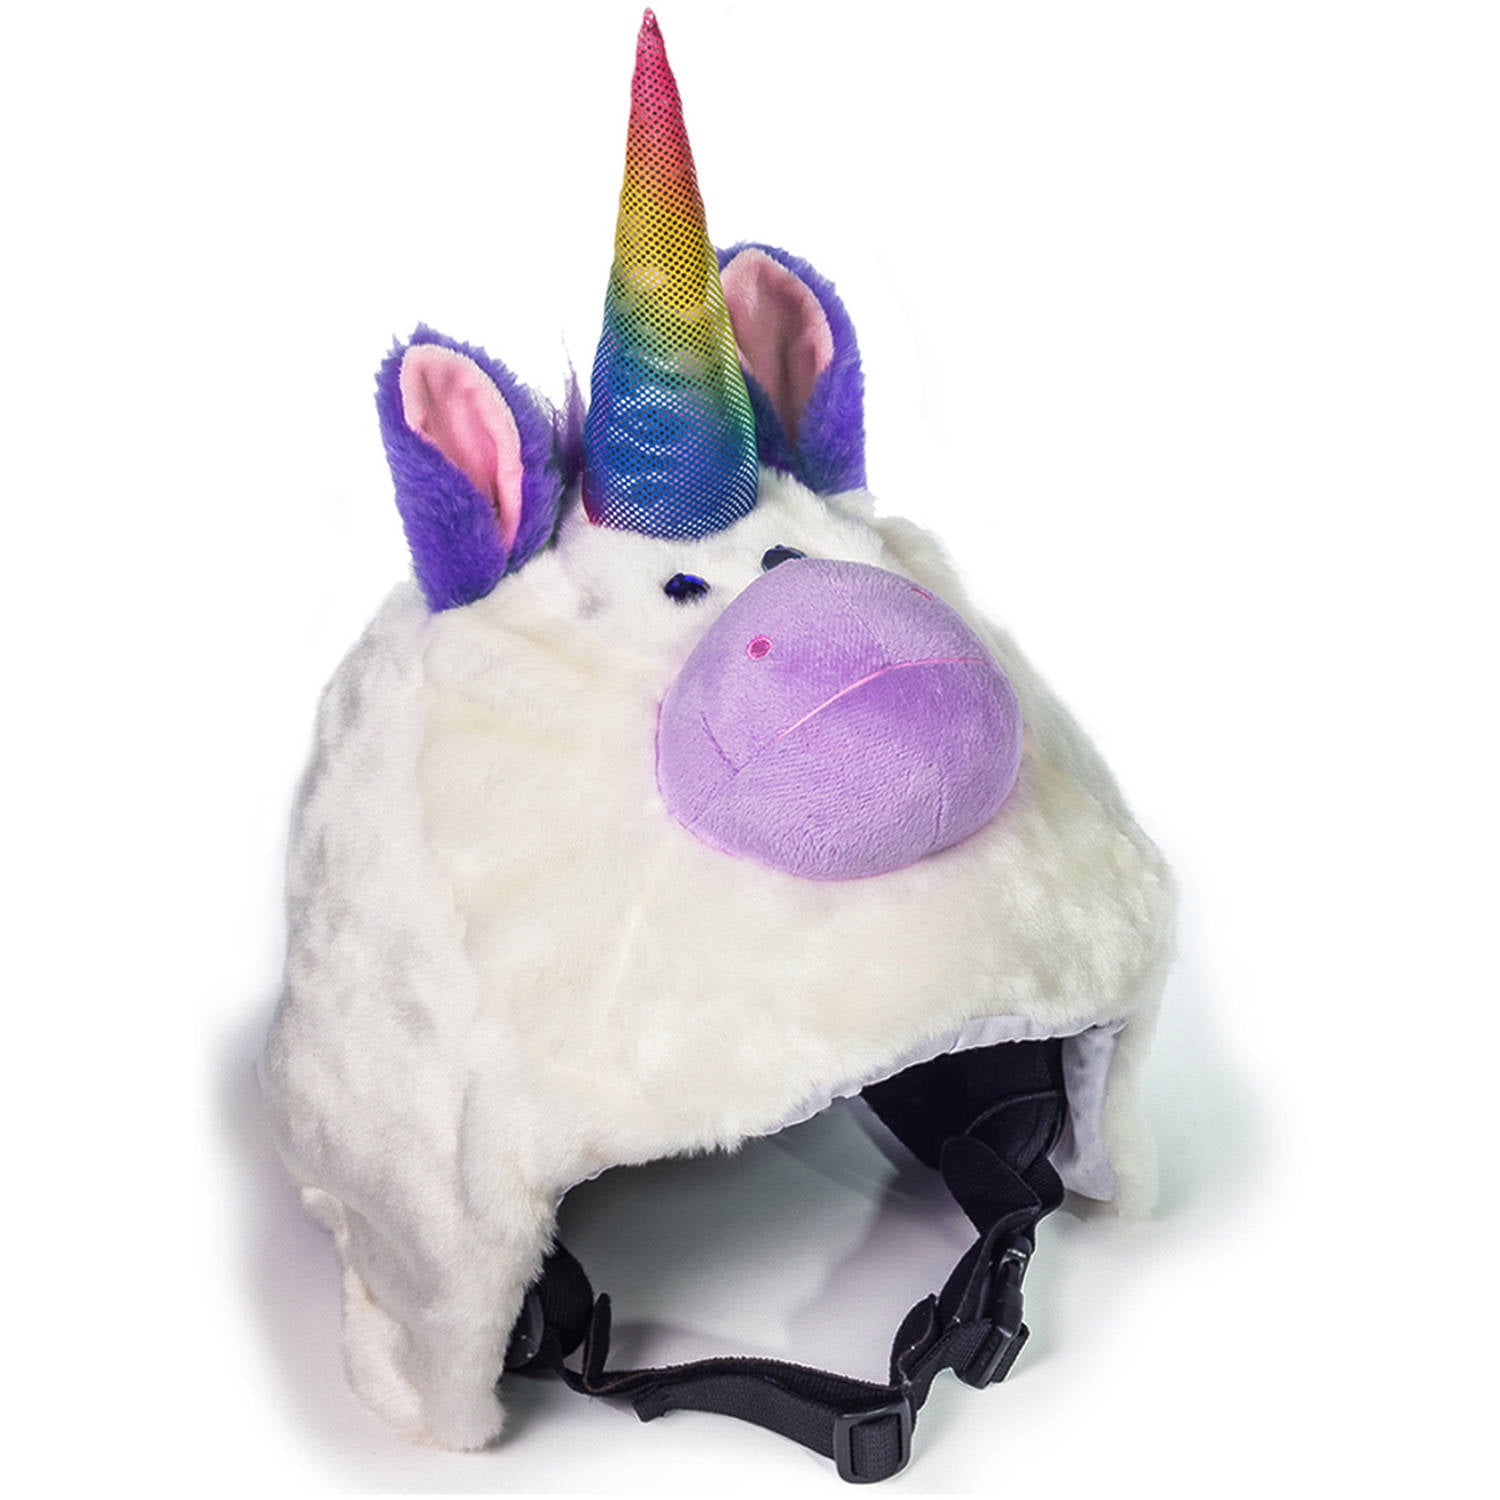 Hoxyheads White Unicorn - Couvre-casque 